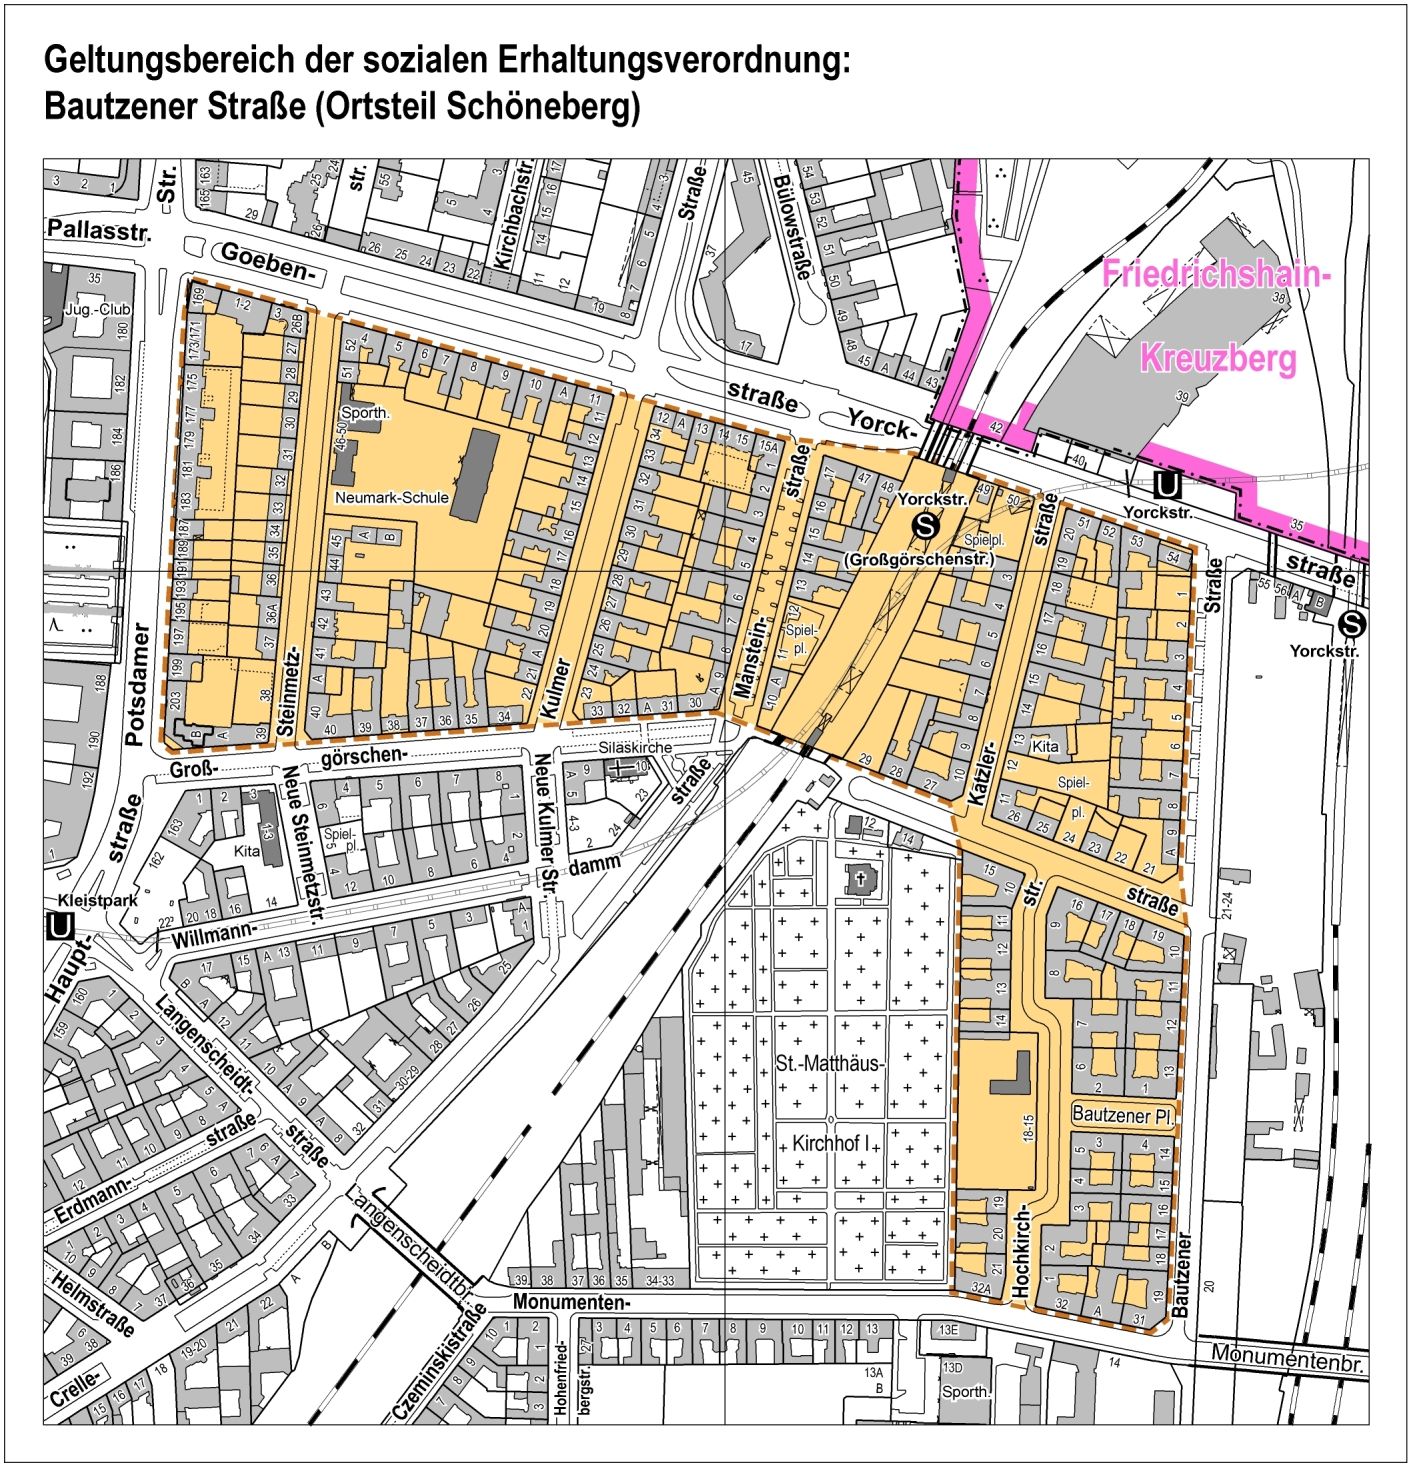 Bildvergrößerung: Karte Bautzener Straße